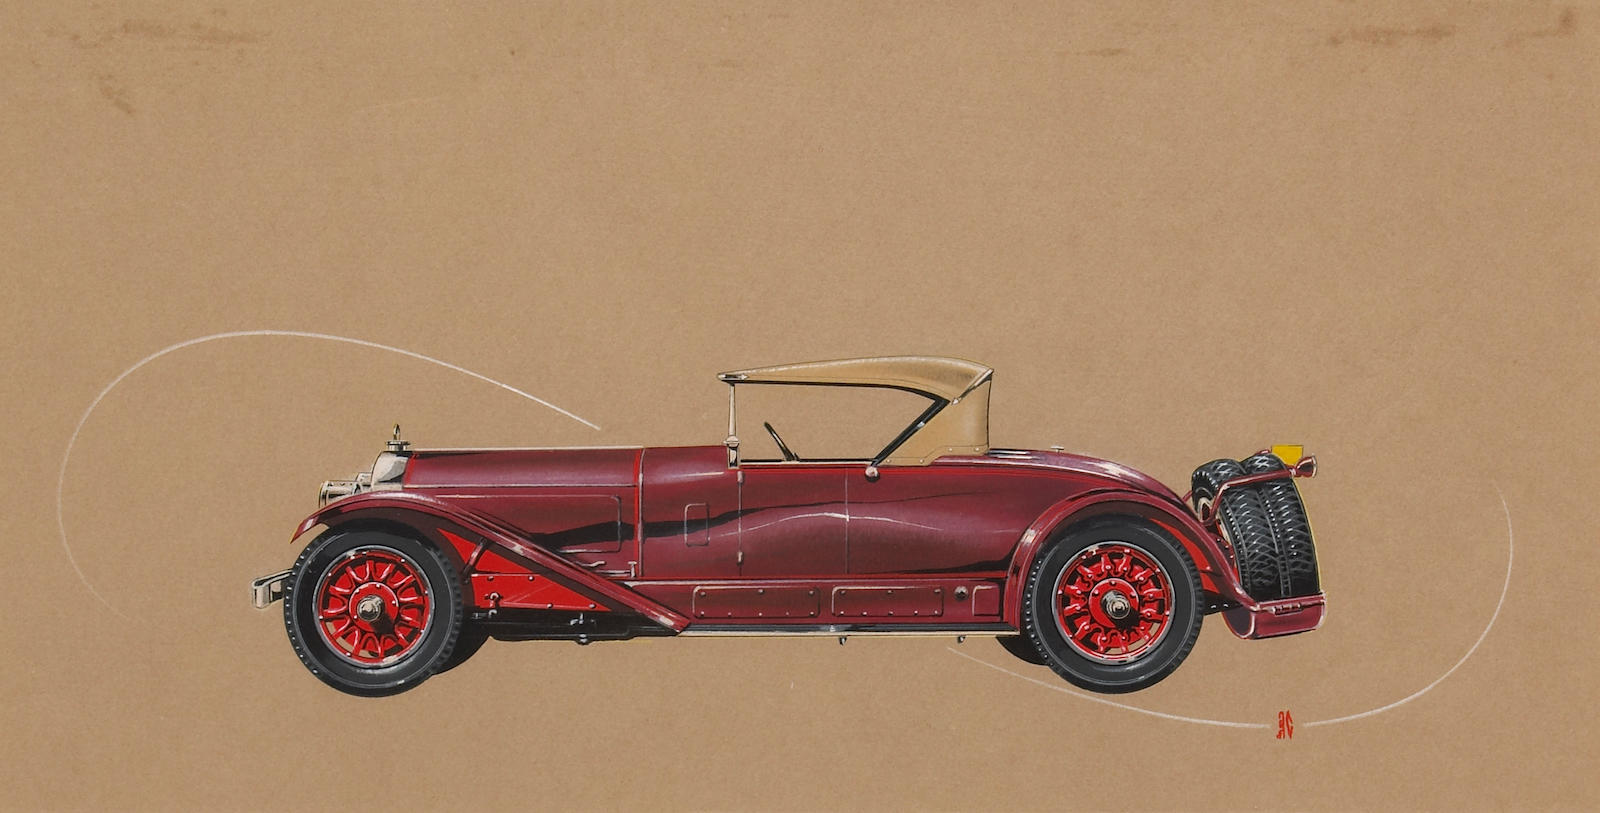 1925 Locomobile Roadster Model 48 — 'Big Red': Artwork by Count Alexis de Sakhnoffsky